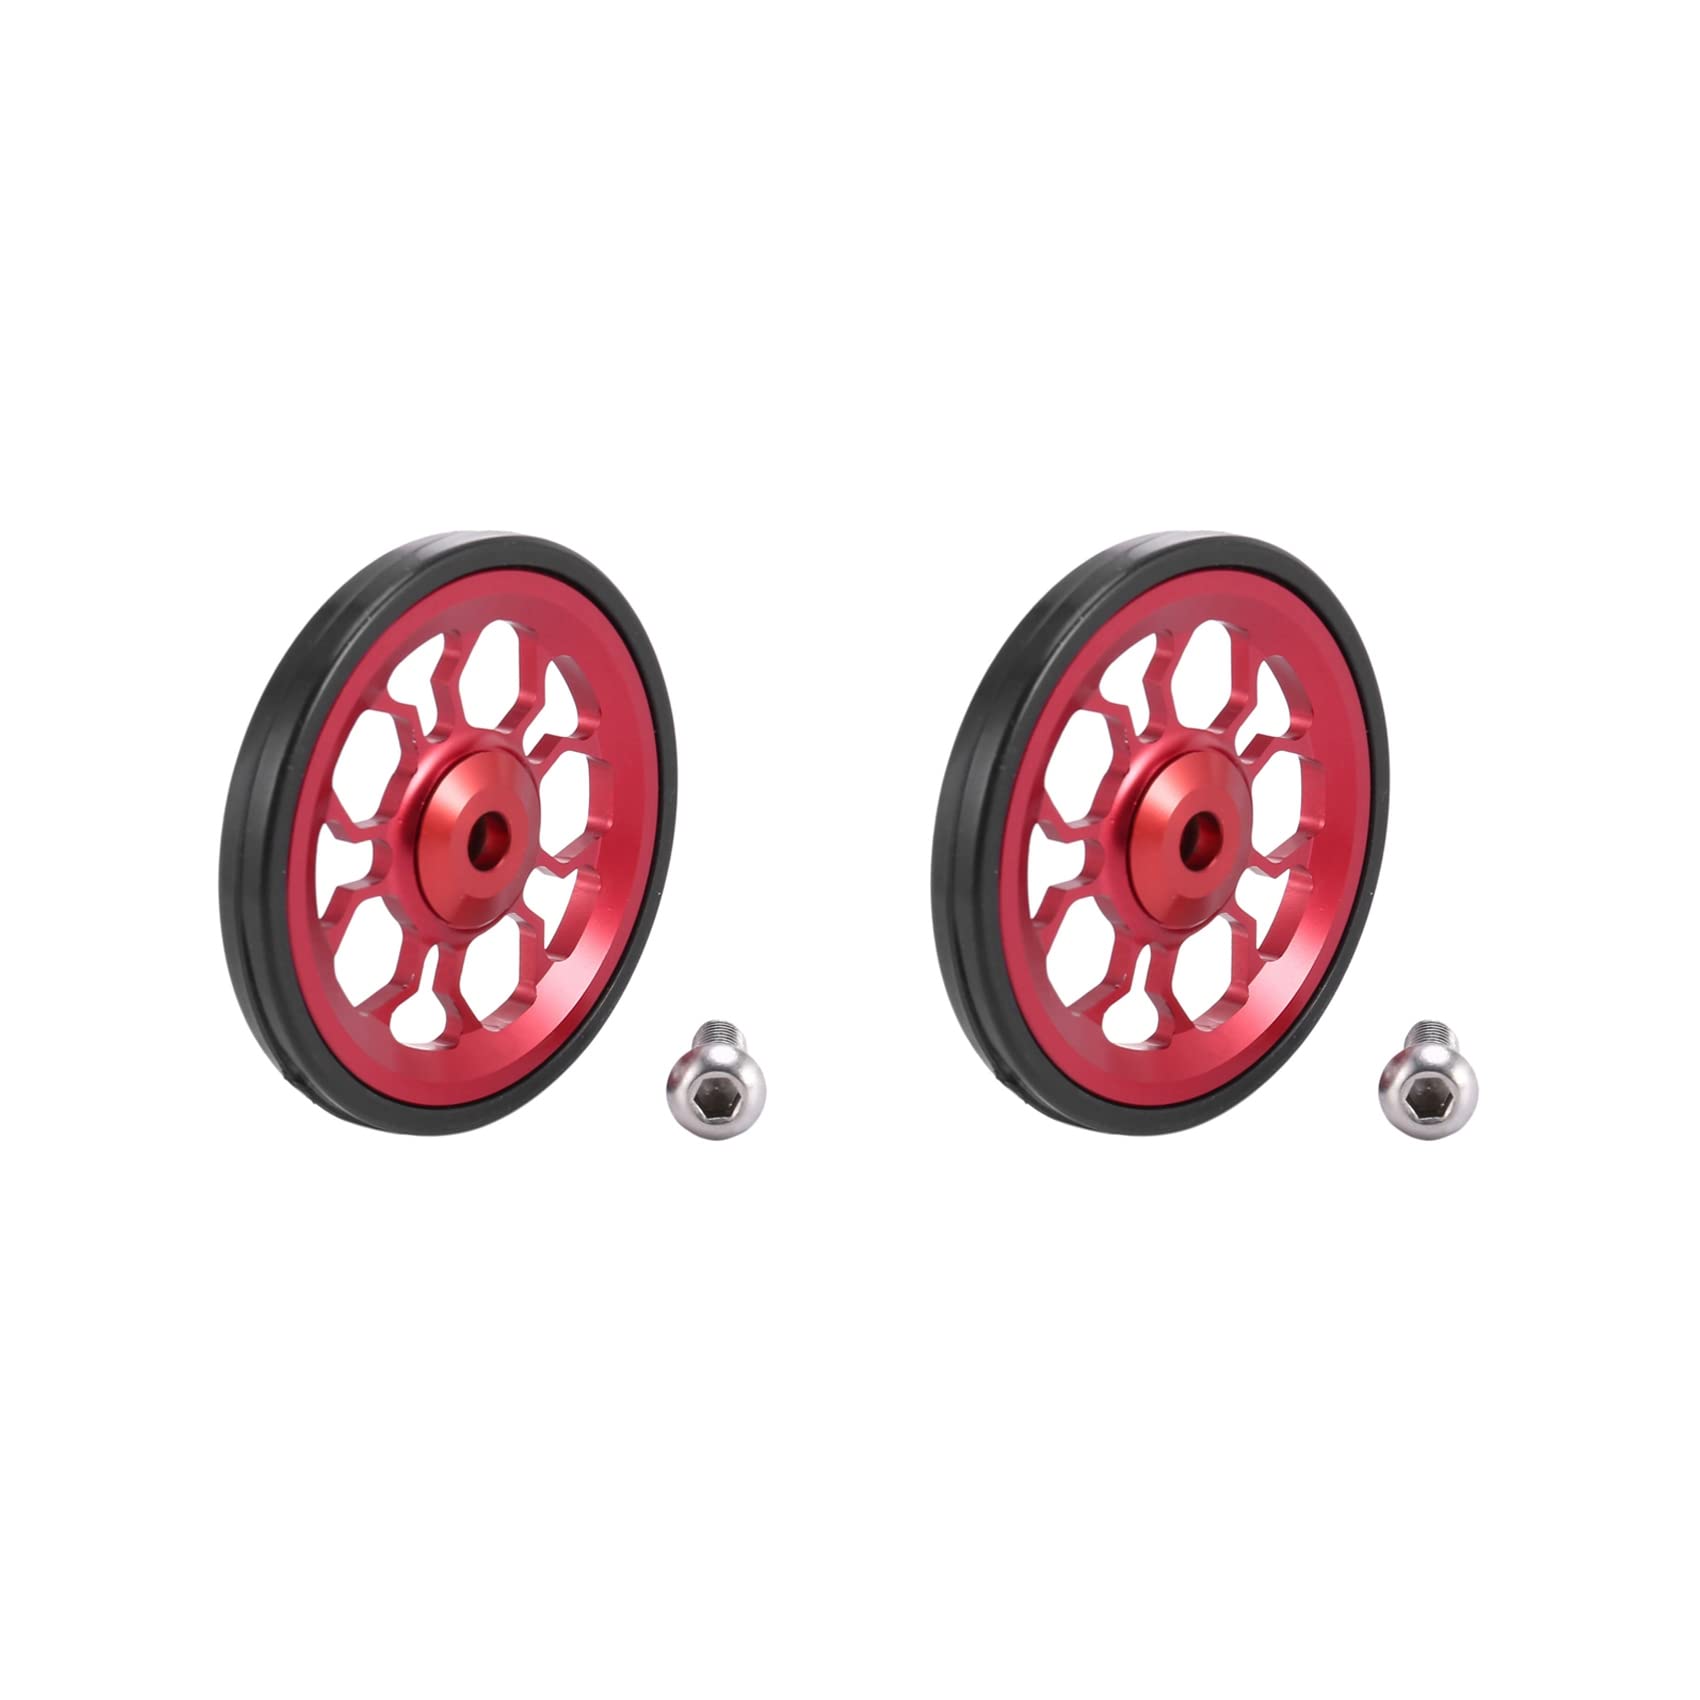 VENEKA 2X Faltrad Einfaches Rad für Aluminiumlegierung Easywheel Ultralight Sealed Bearing Push Wheels Fahrrad Teile,Rot von VENEKA